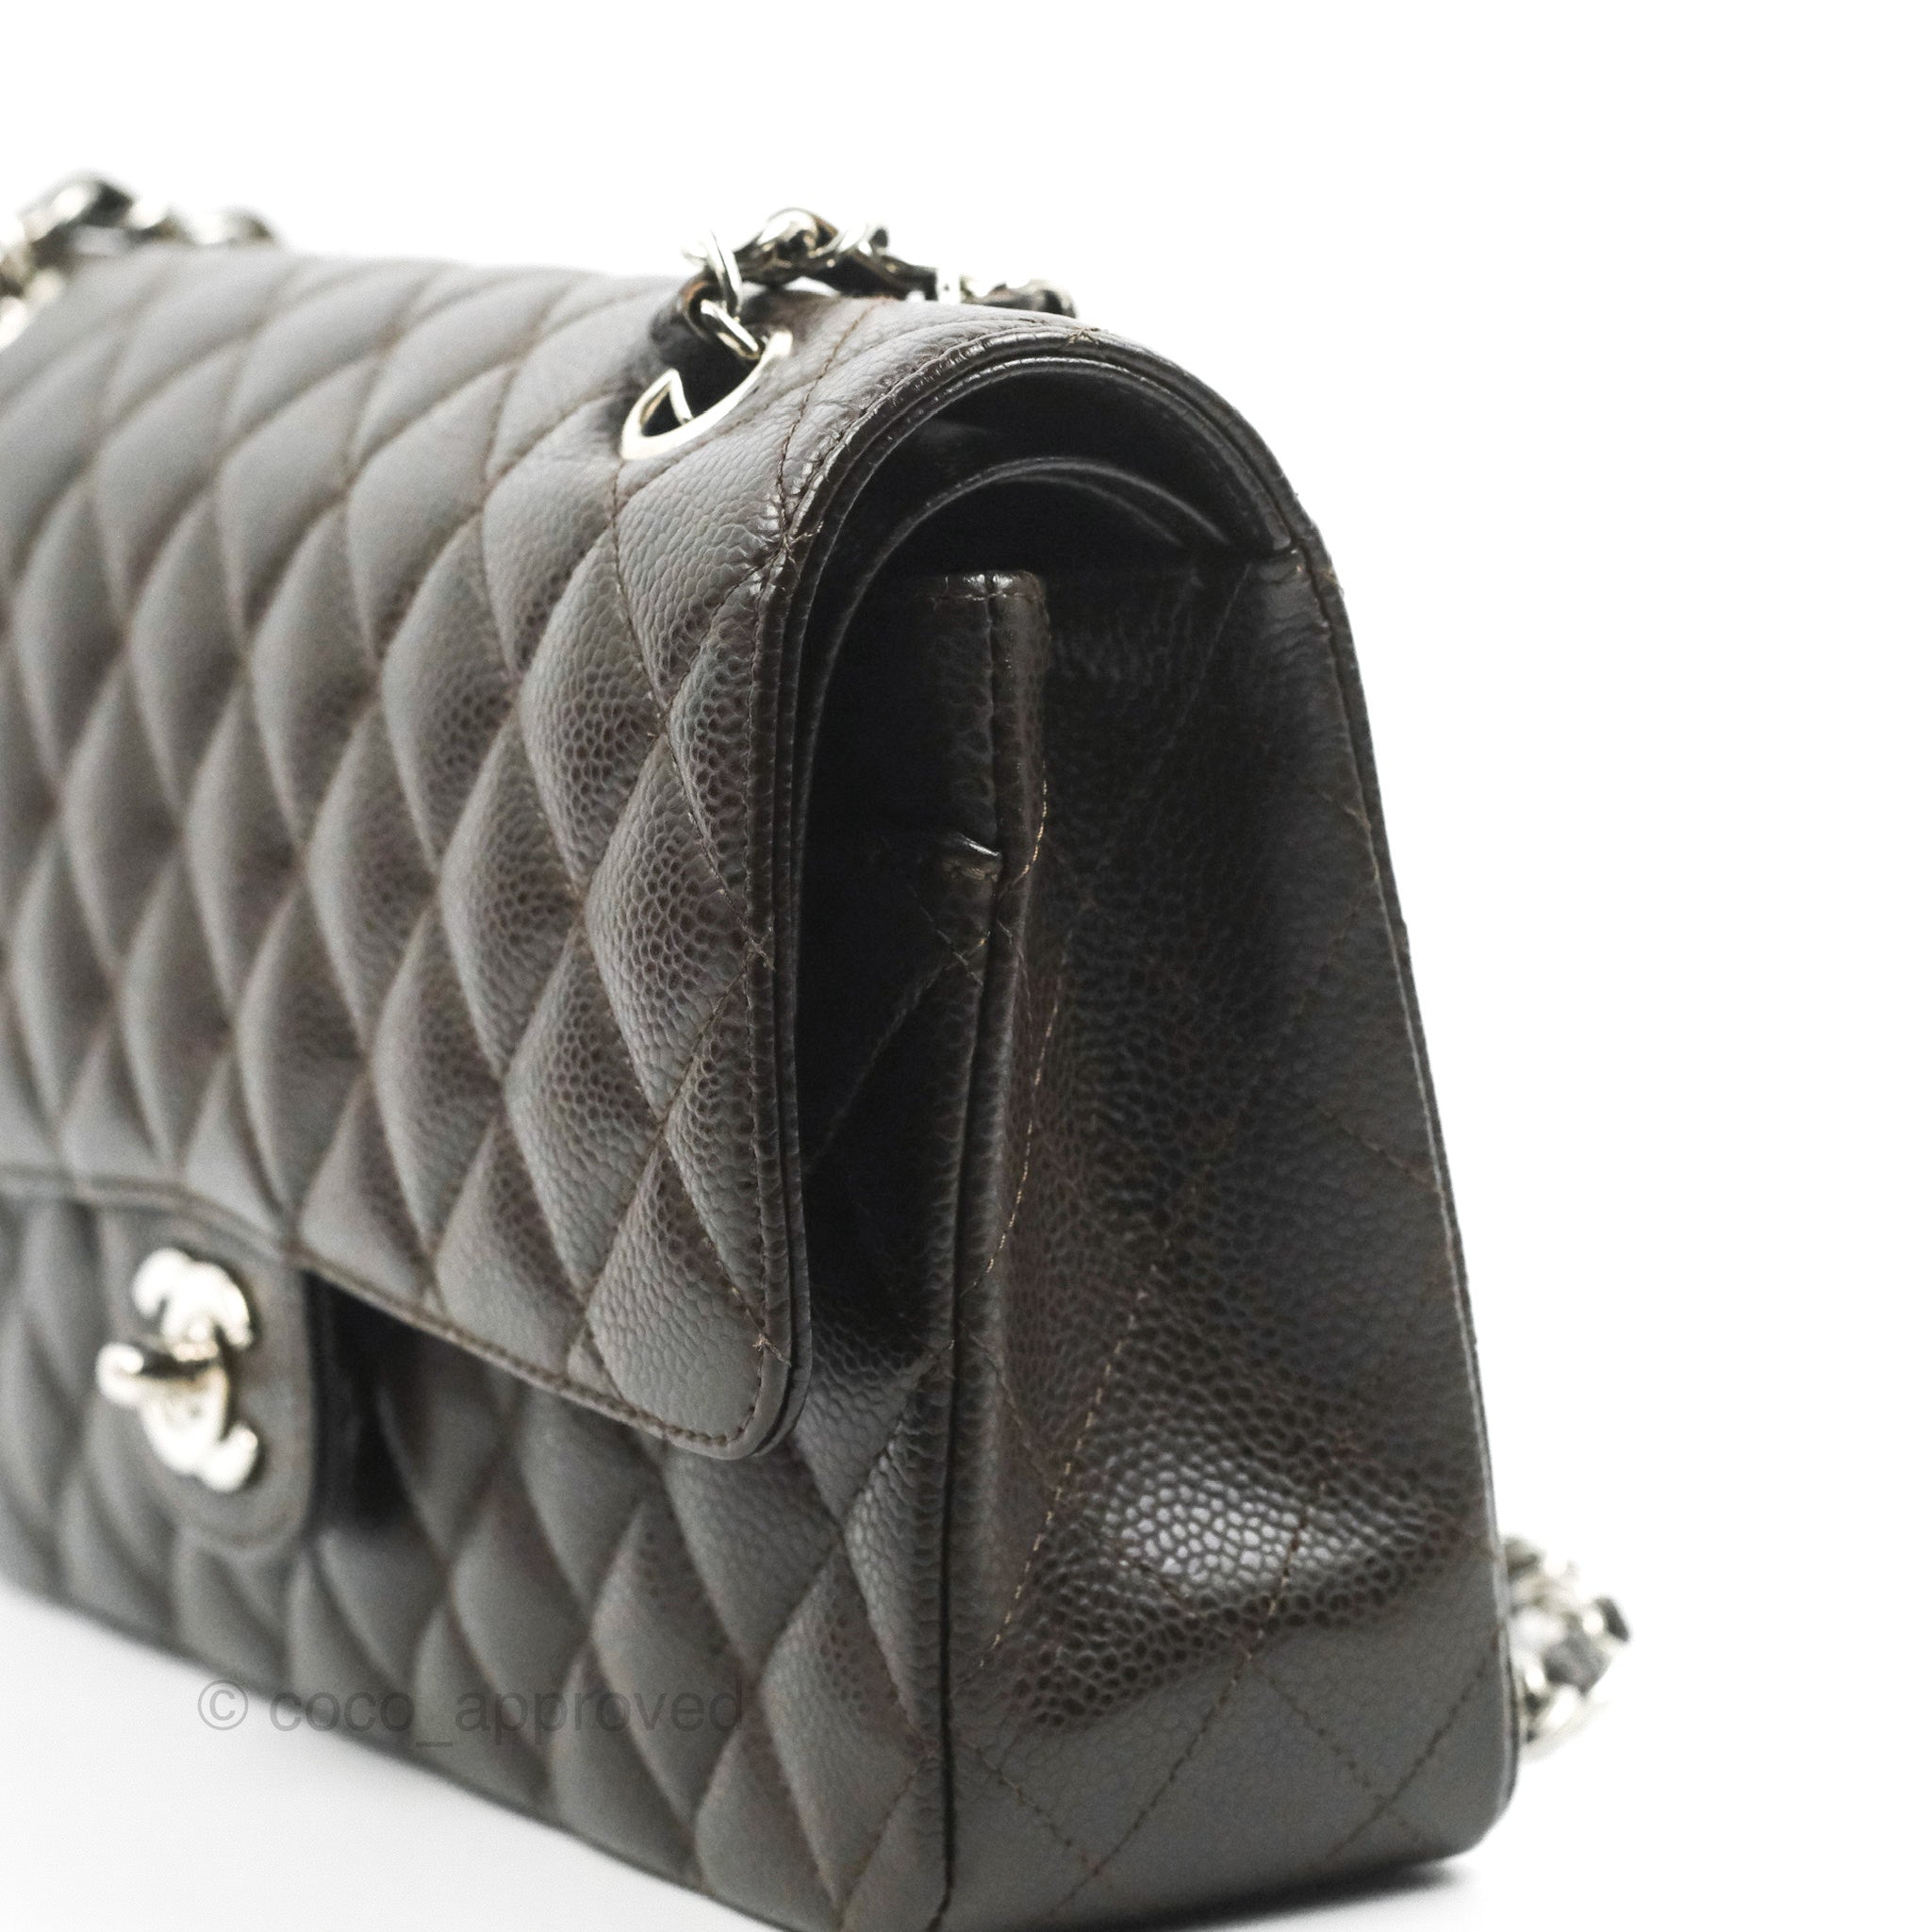 black classic chanel handbag